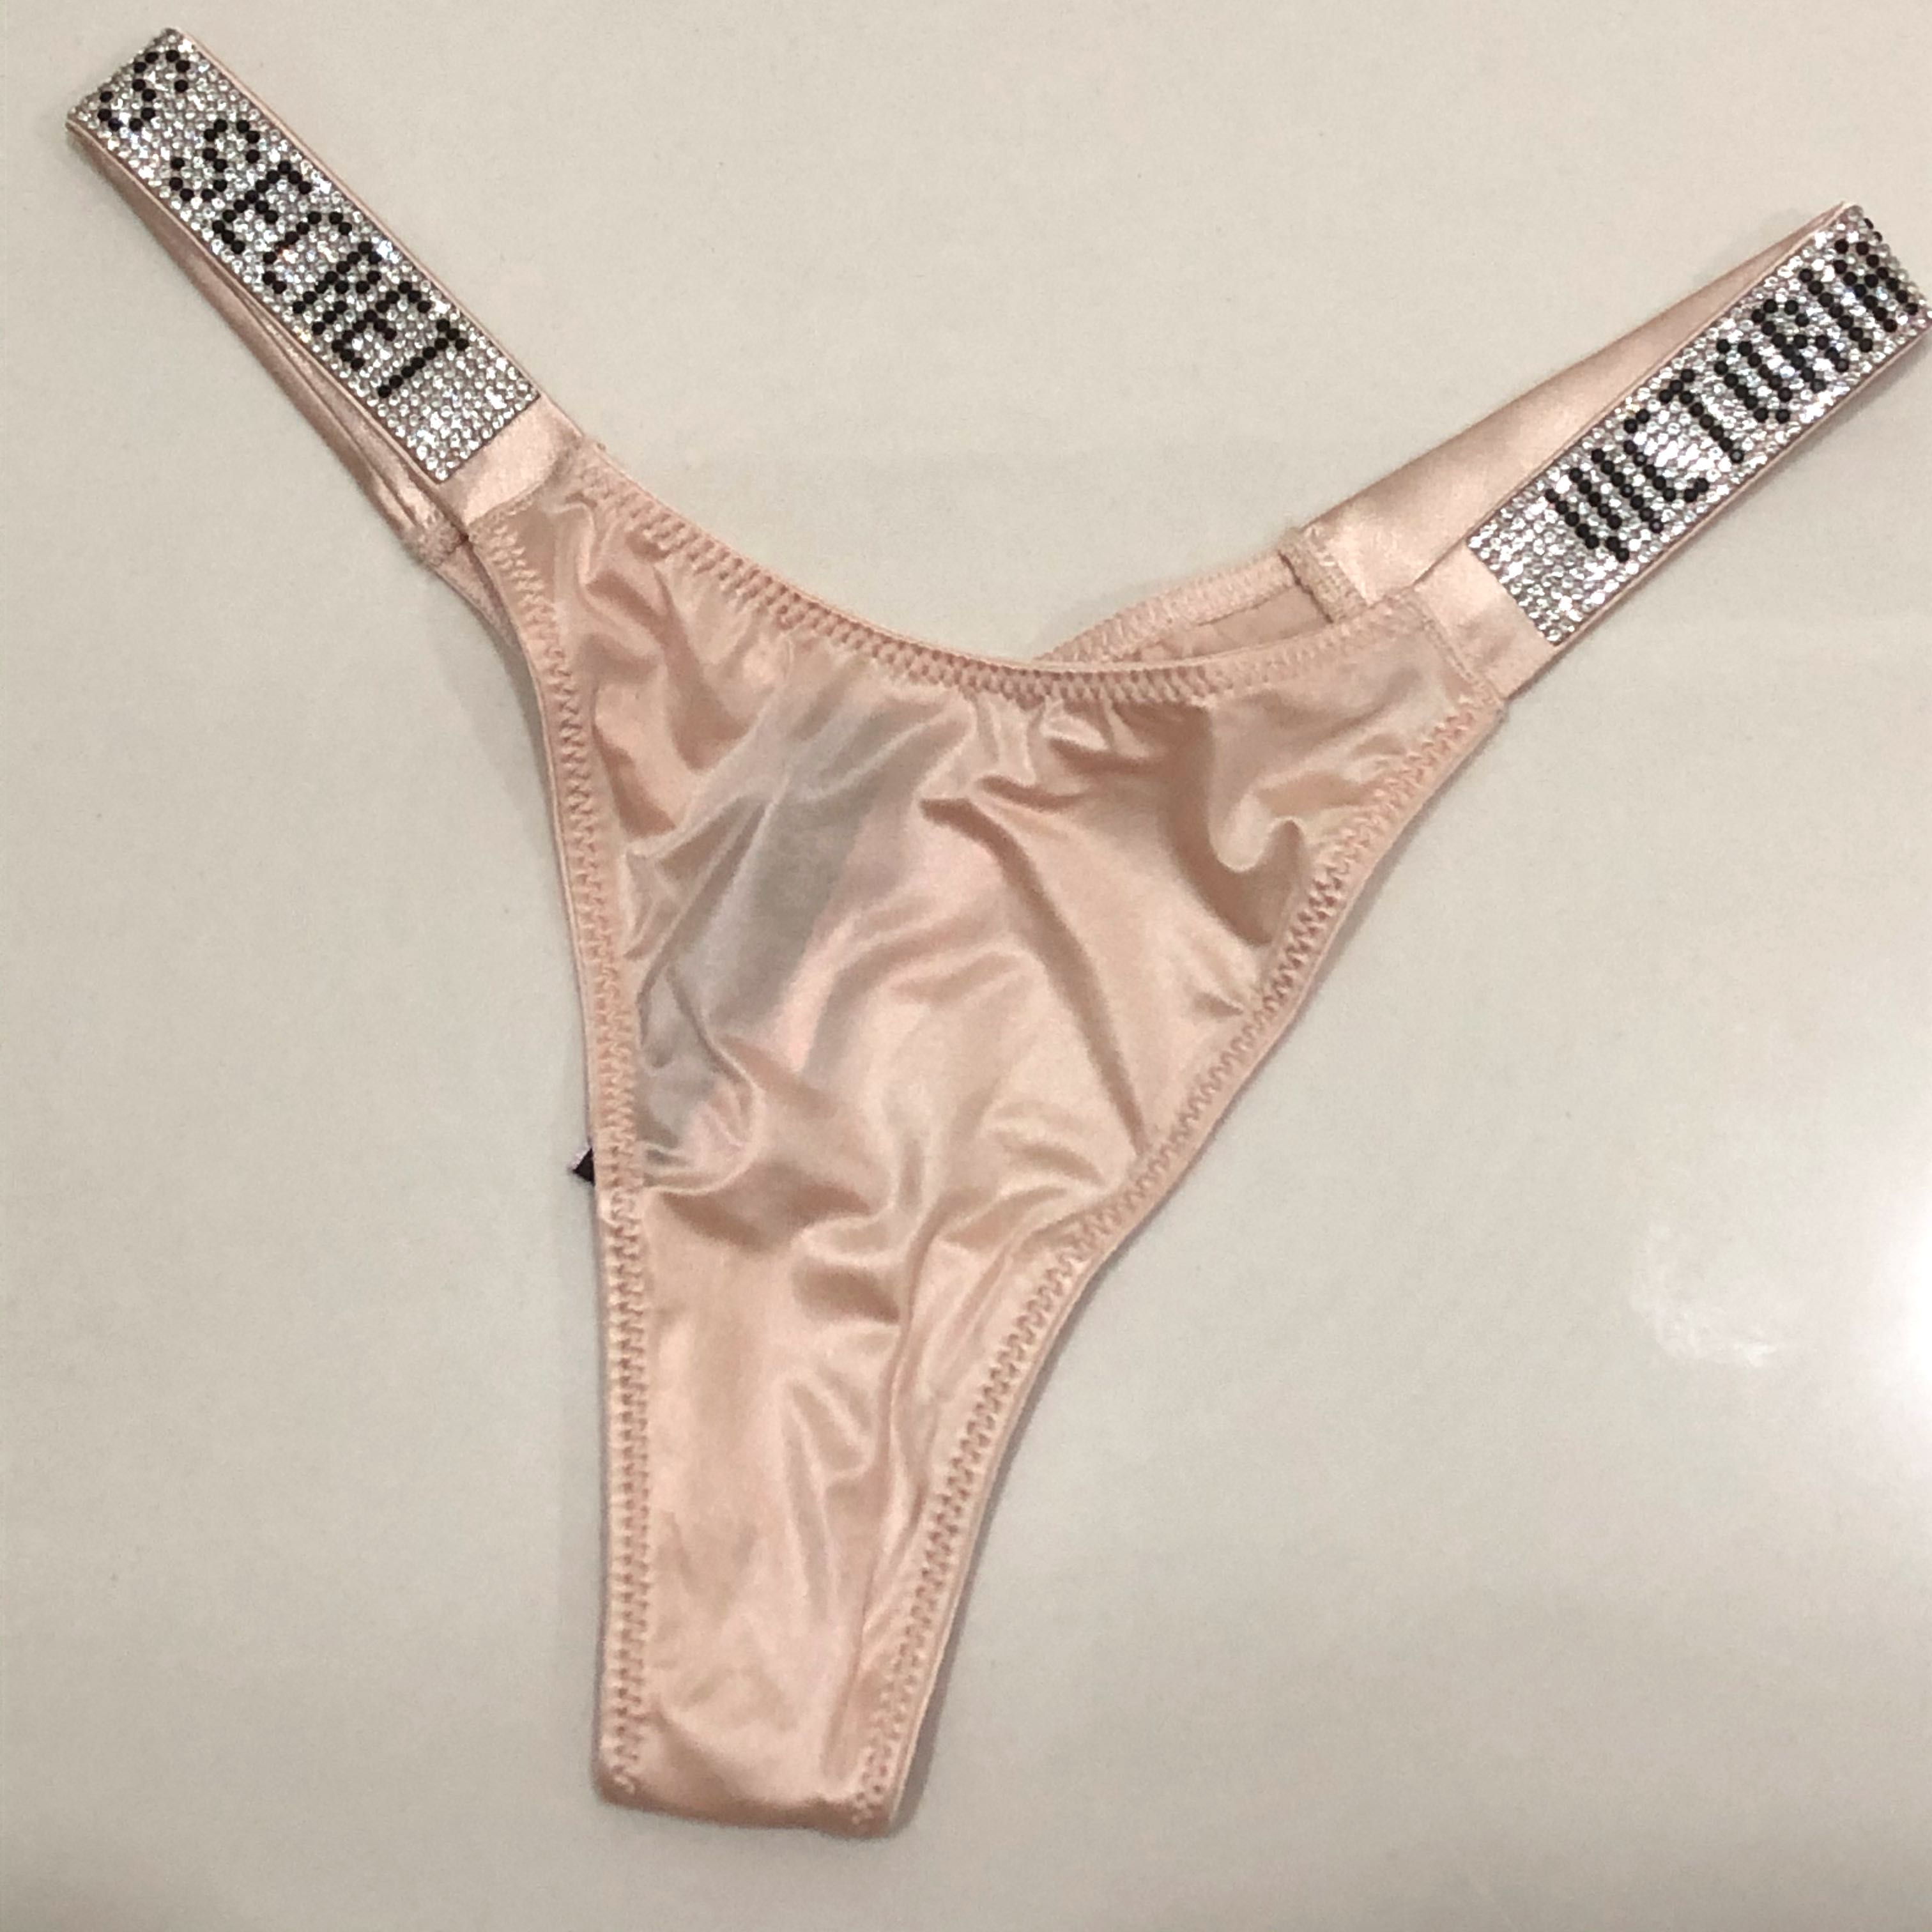 Victoria's Secret Rhinestone Shine Strap Thong Panty - Satin